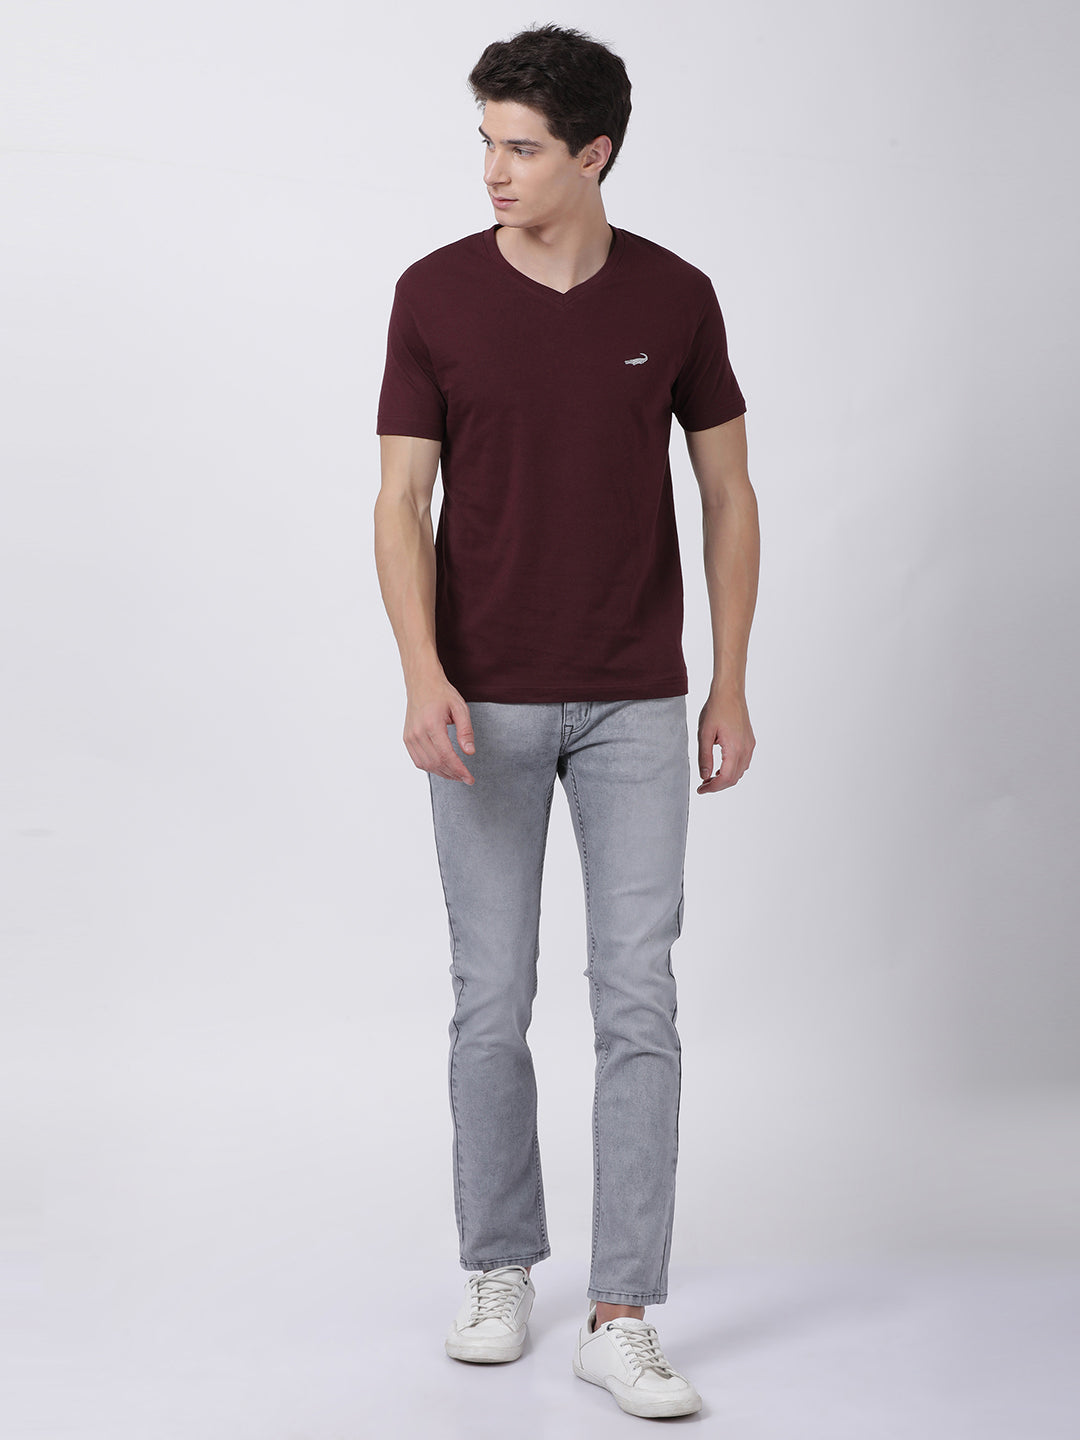 Men's Solid V Neck Half Sleeve Cotton T-Shirt - WINE